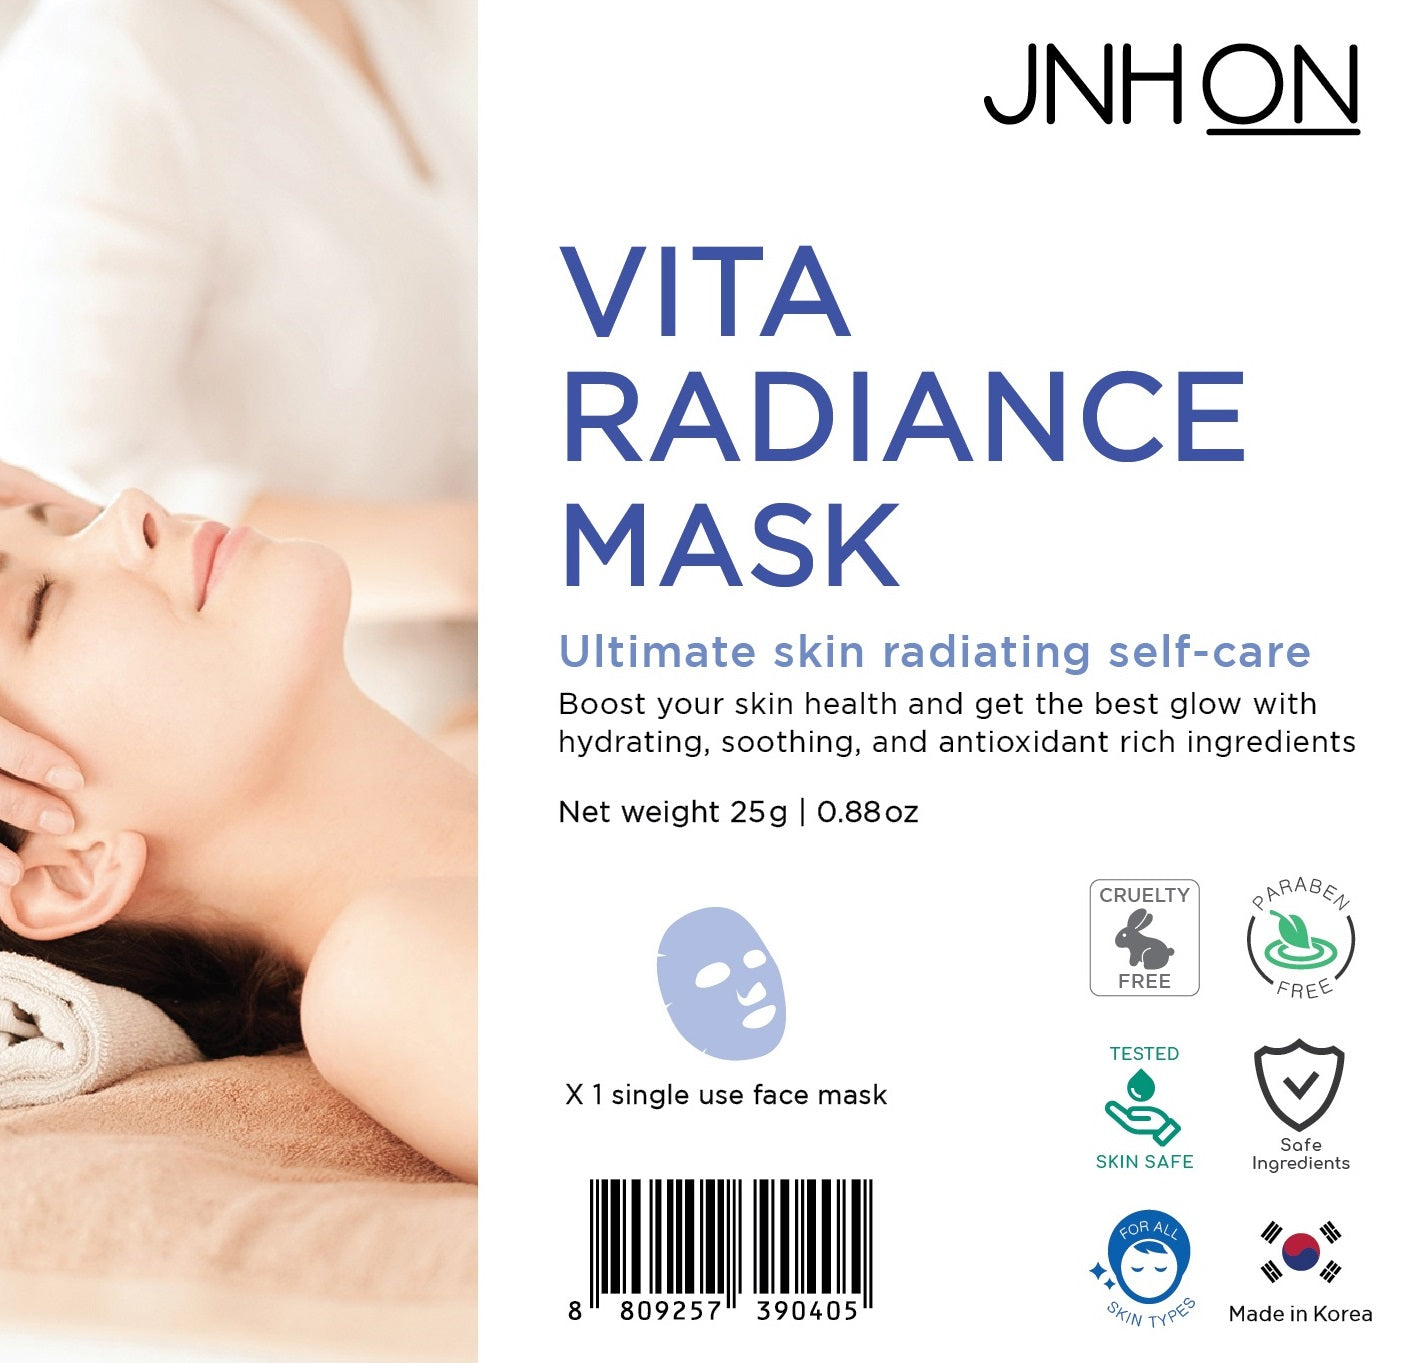 JNH ON VITA Radiance Mask